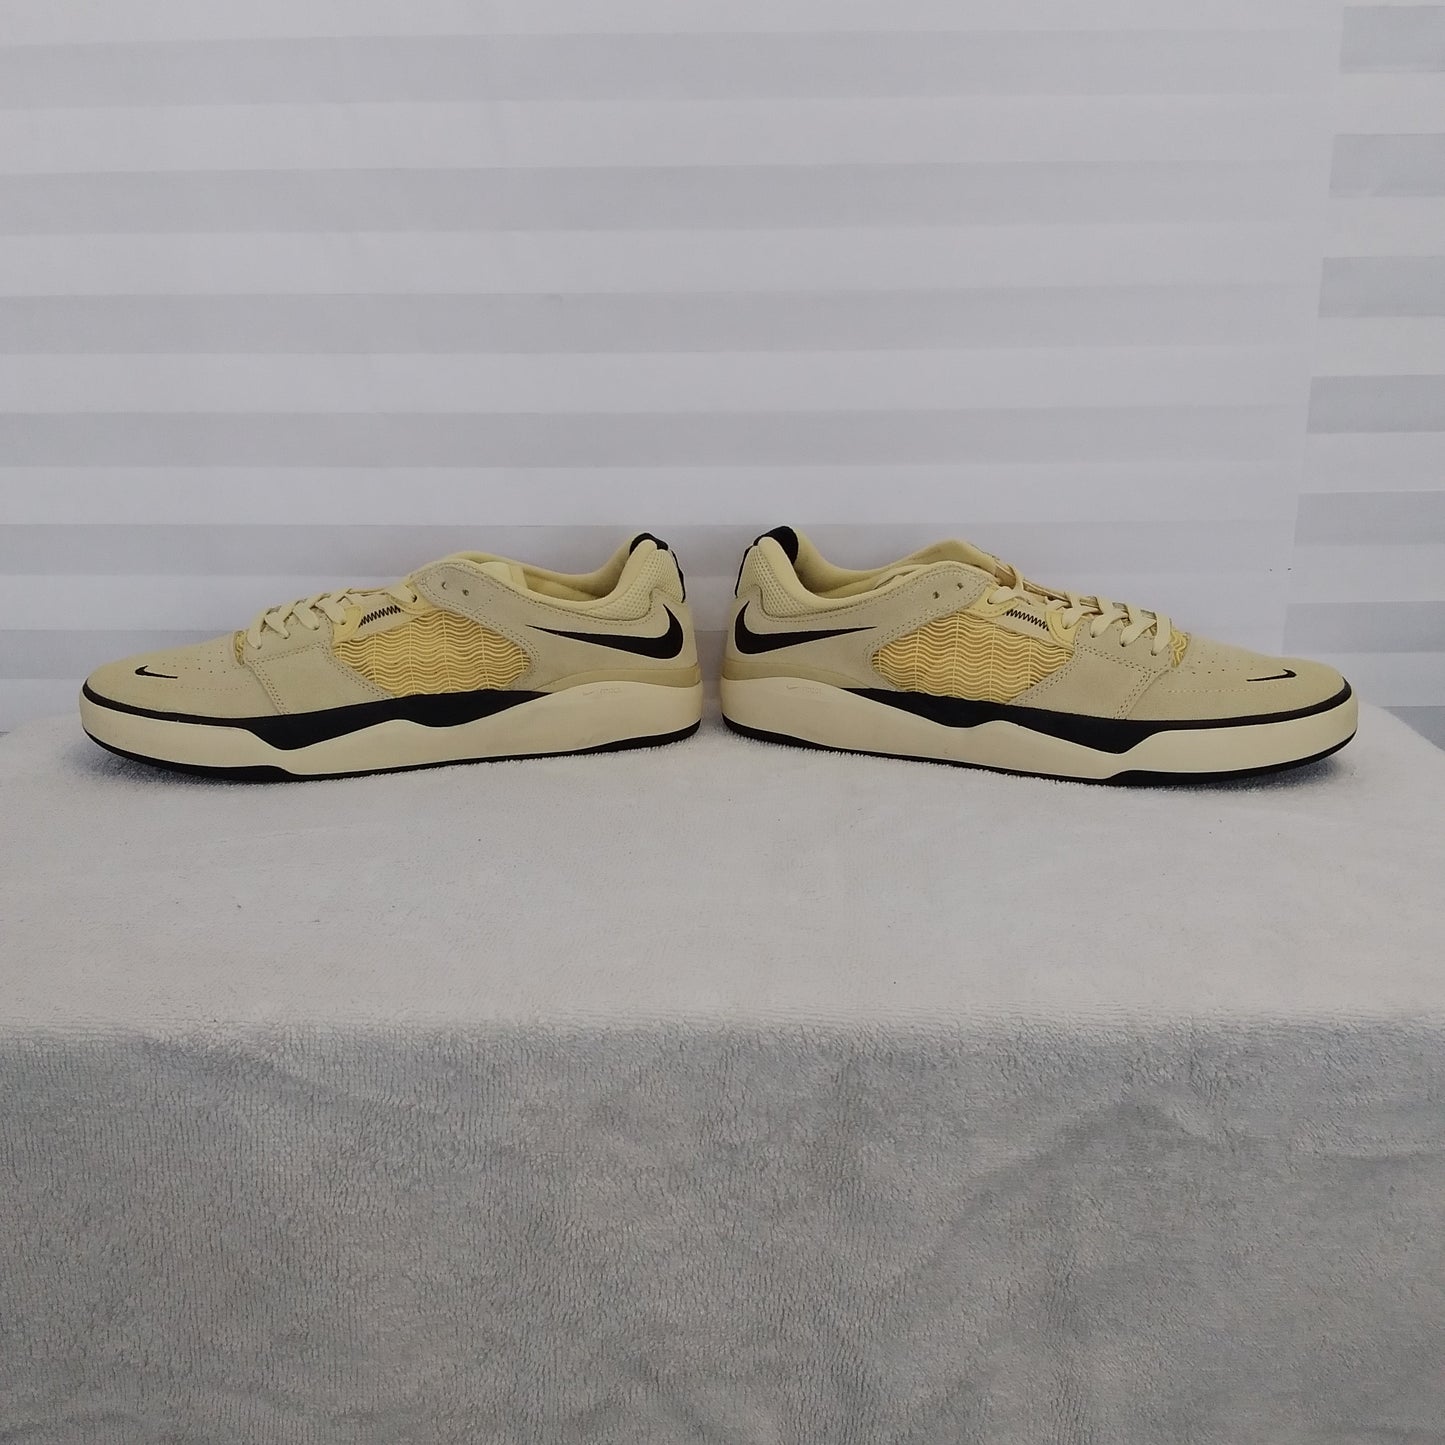 NIB - Nike SB ISHOD Lemon Wash/Black-Lemon Drop Sneakers - Size: Men 13 Women 14.5